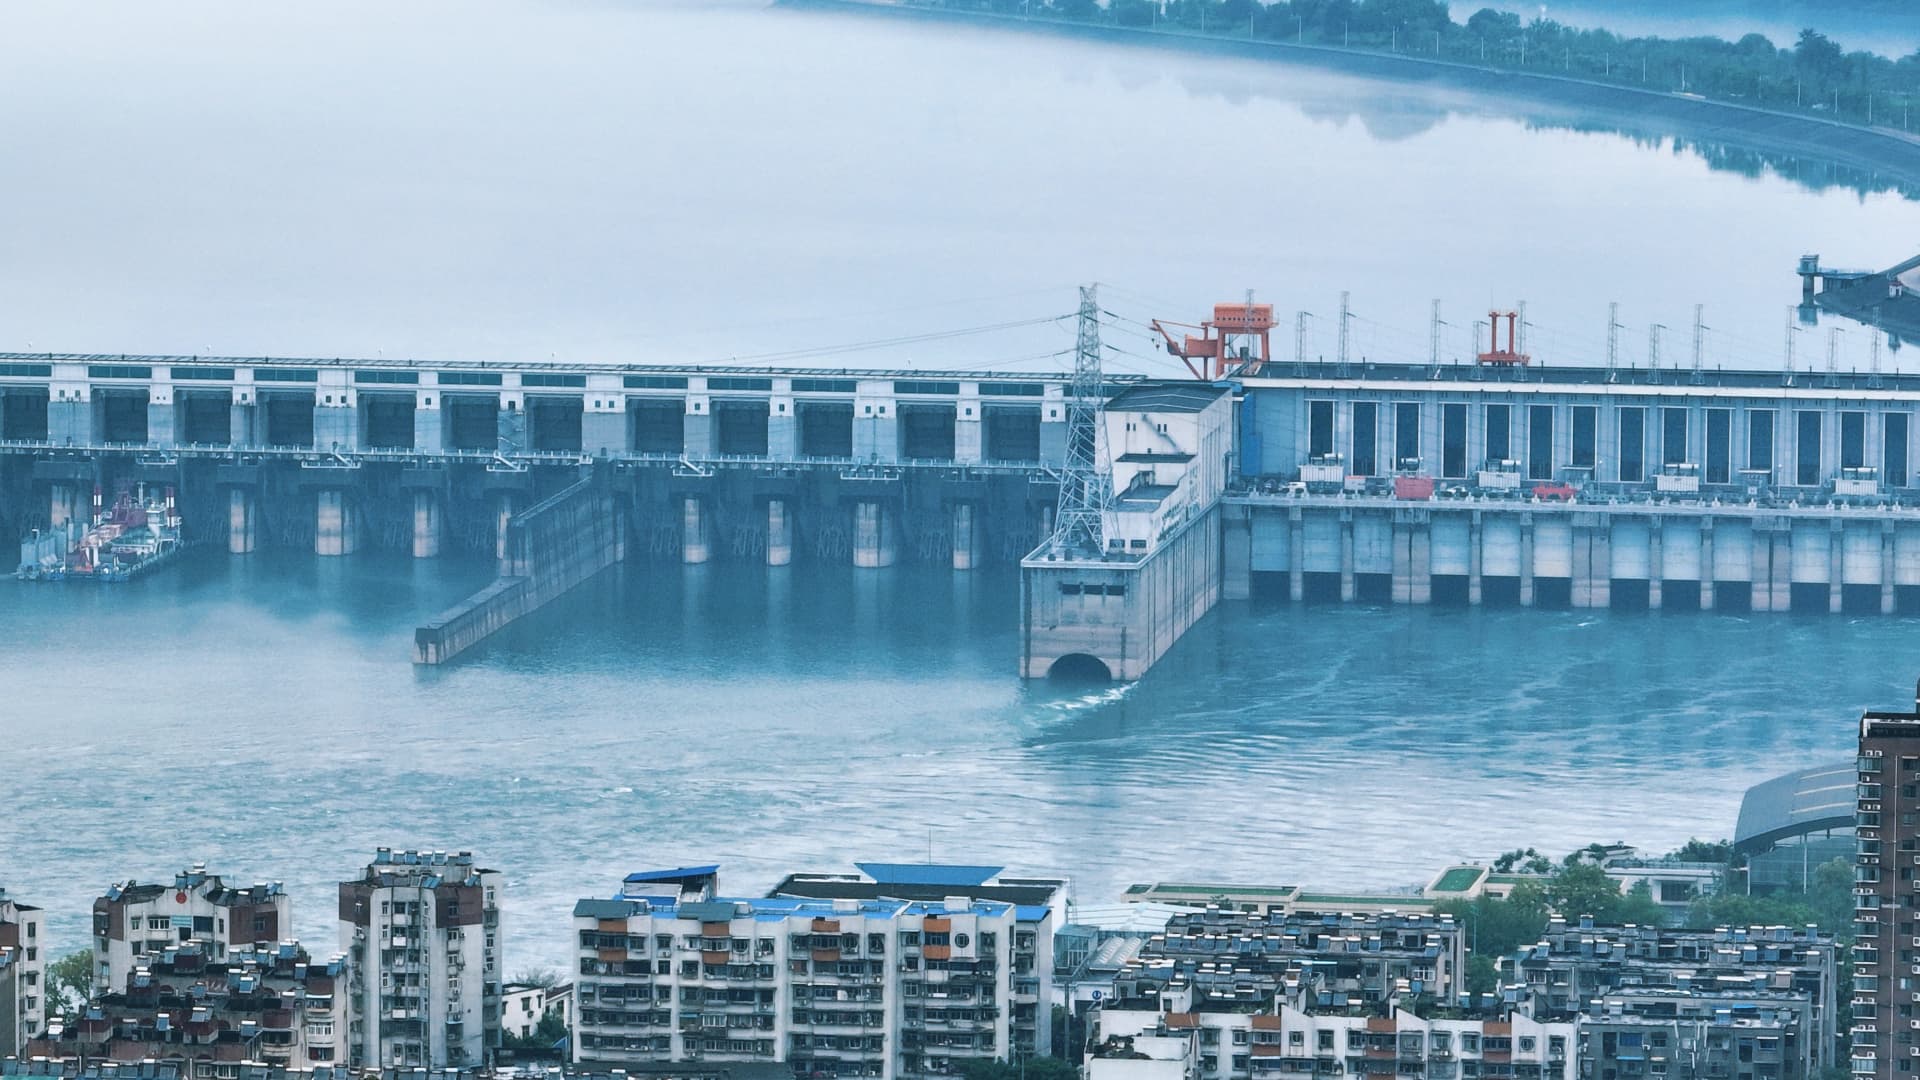 The Gezhouba dam water conservancy project of the Yangtze River after heavy rain in Yichang, Hubei Province, China.